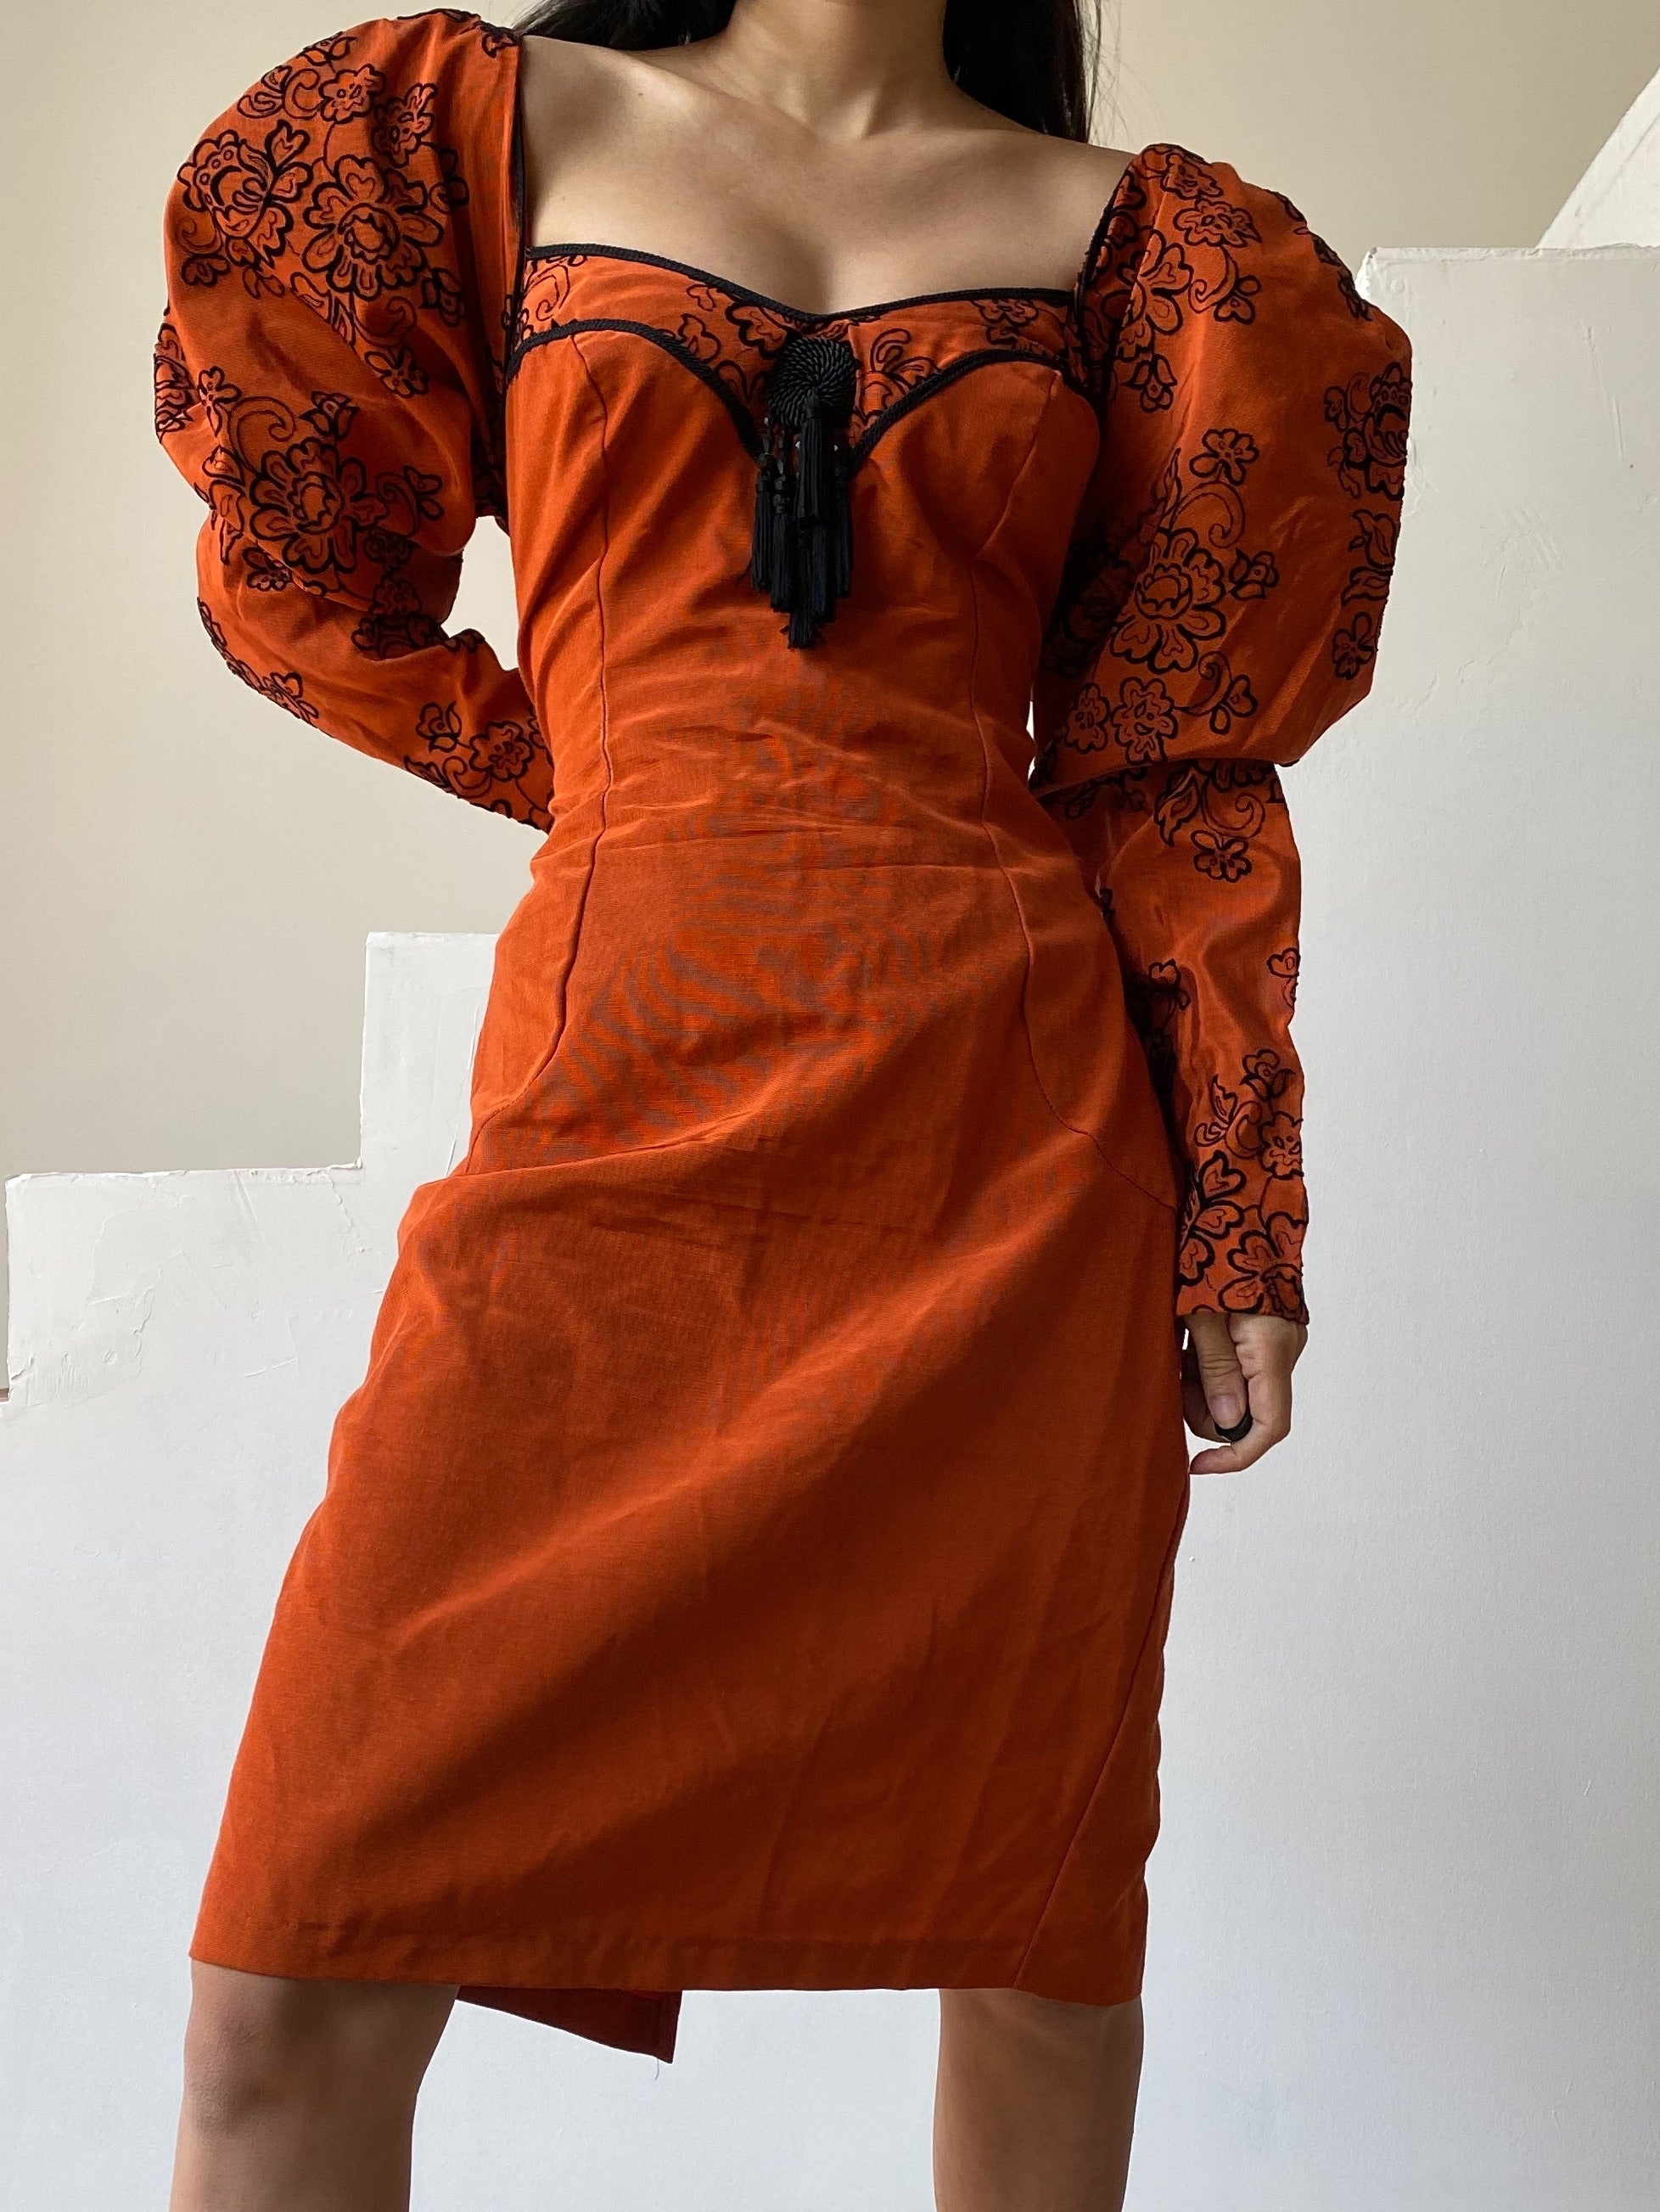 rust colored dress